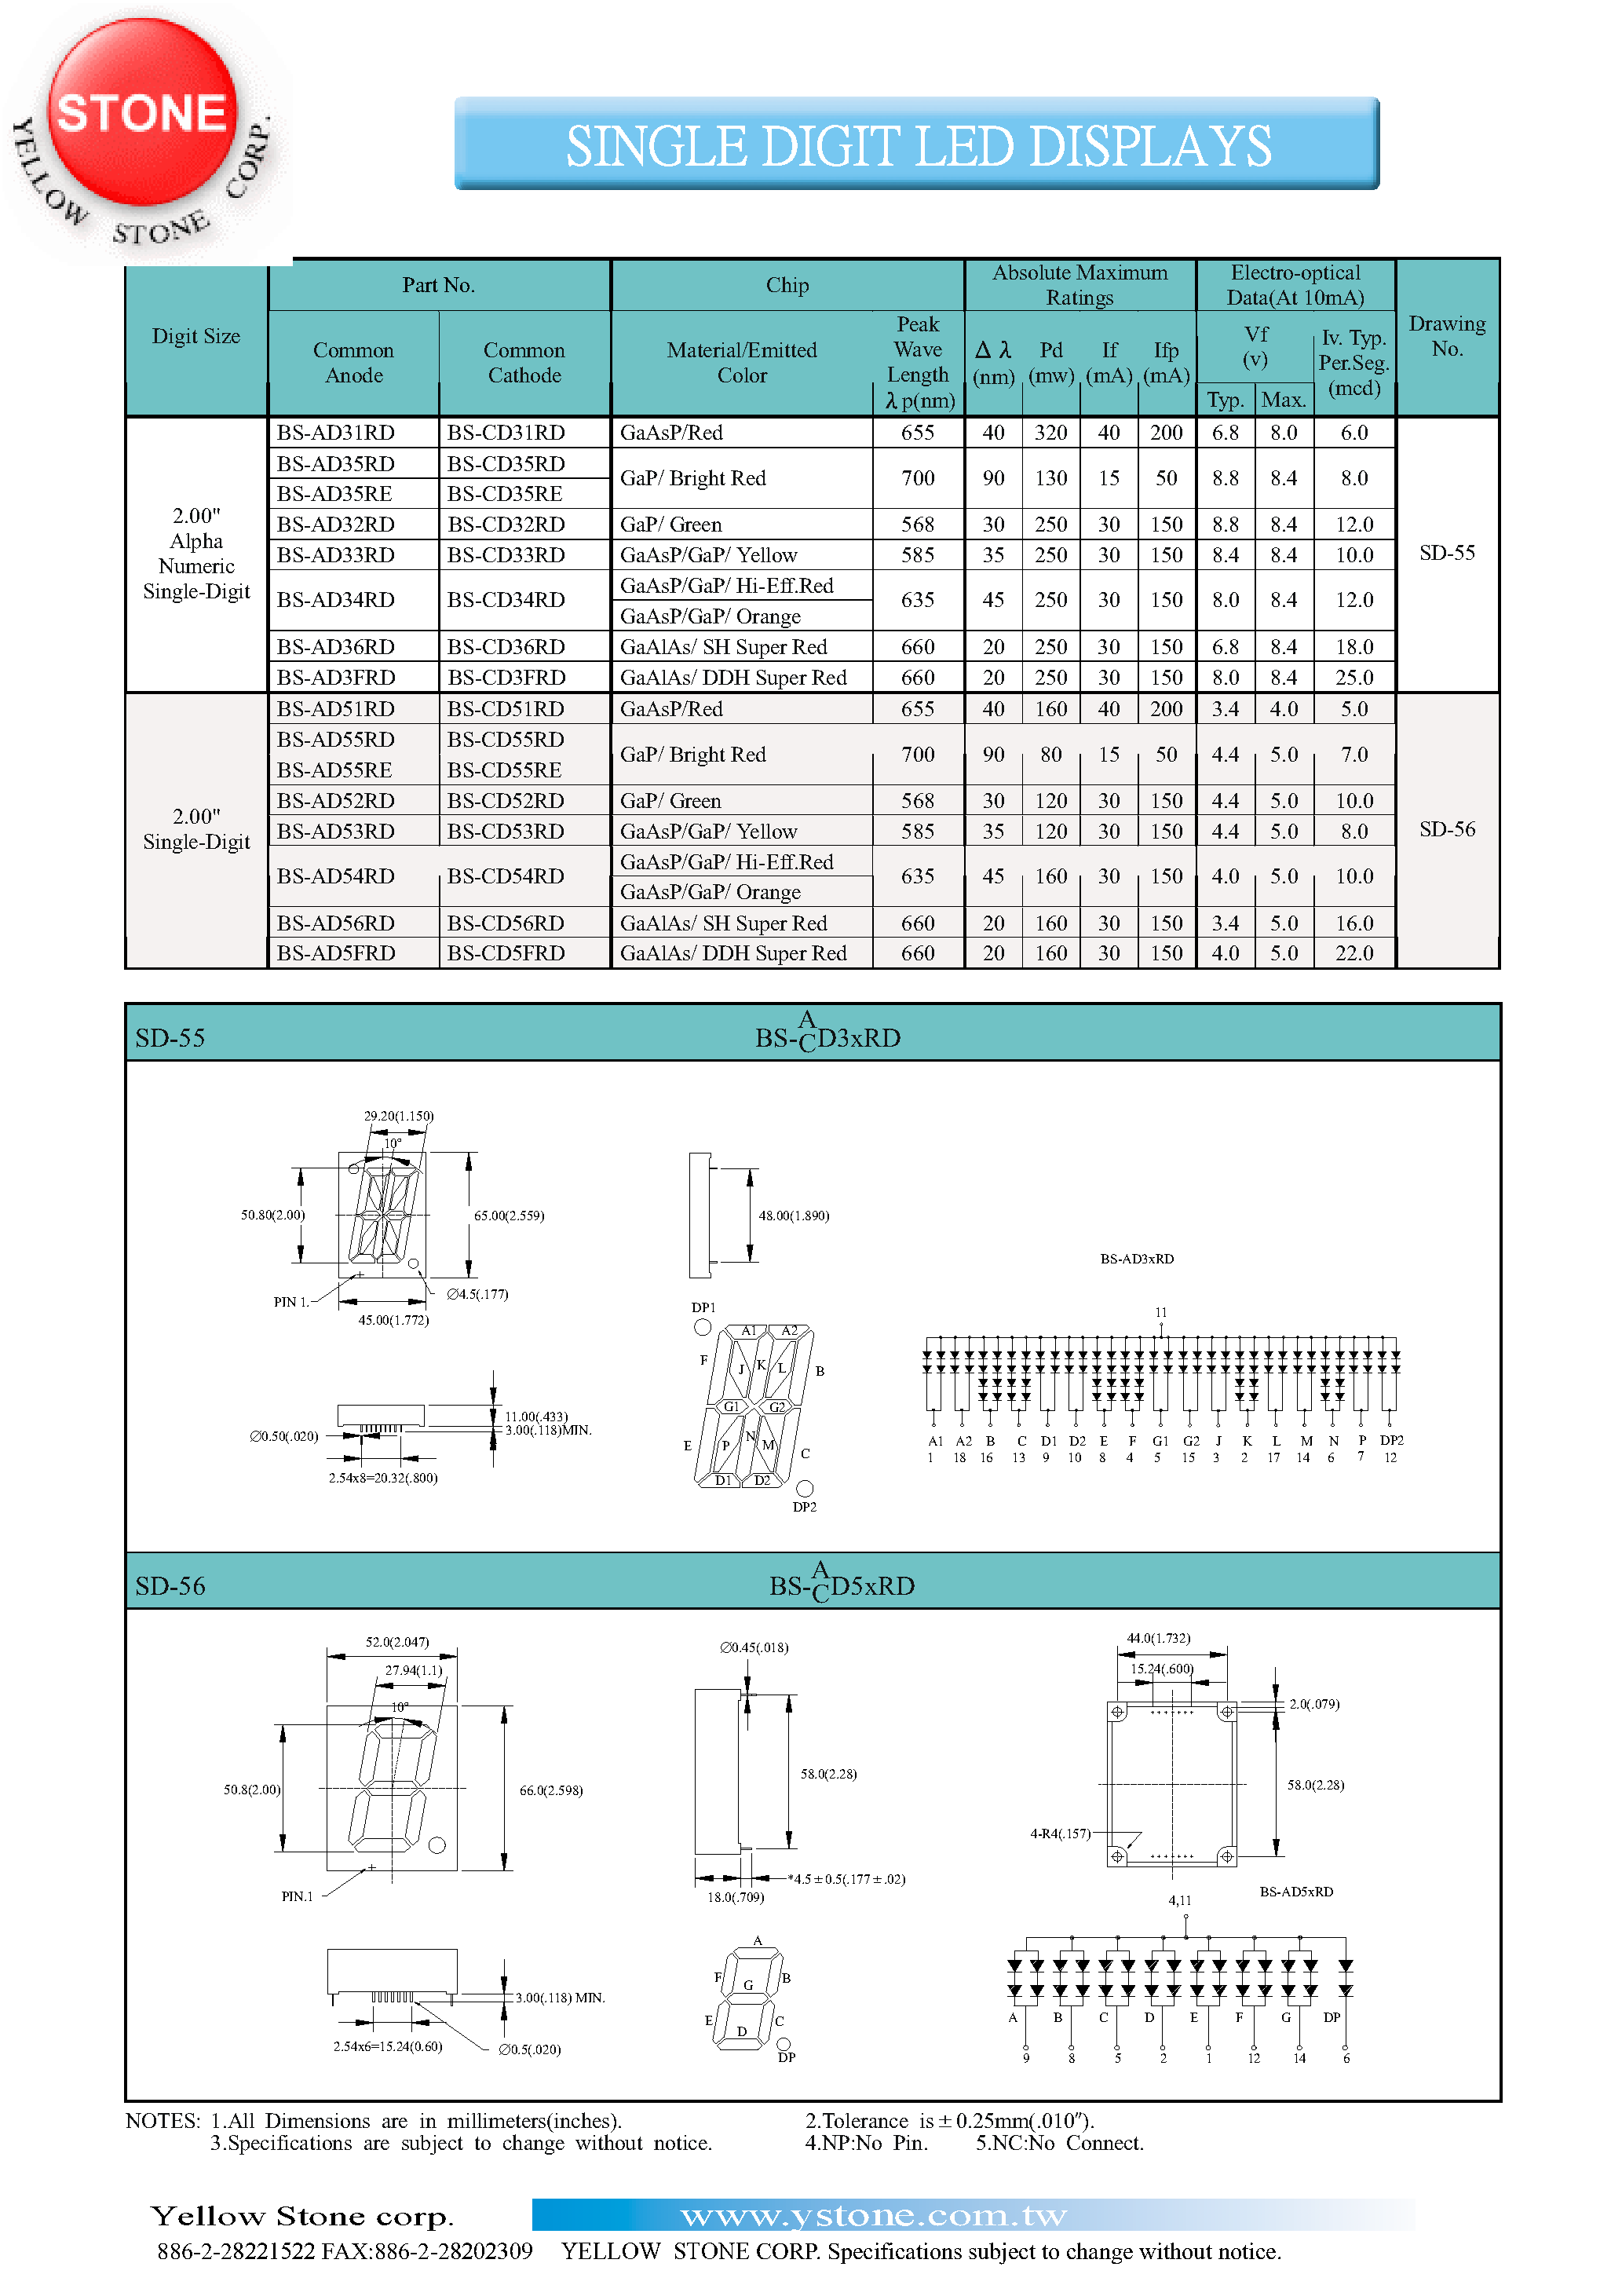 Datasheet BS-AD36RD - SINGLE DIGIT LED DISPLAYS page 1